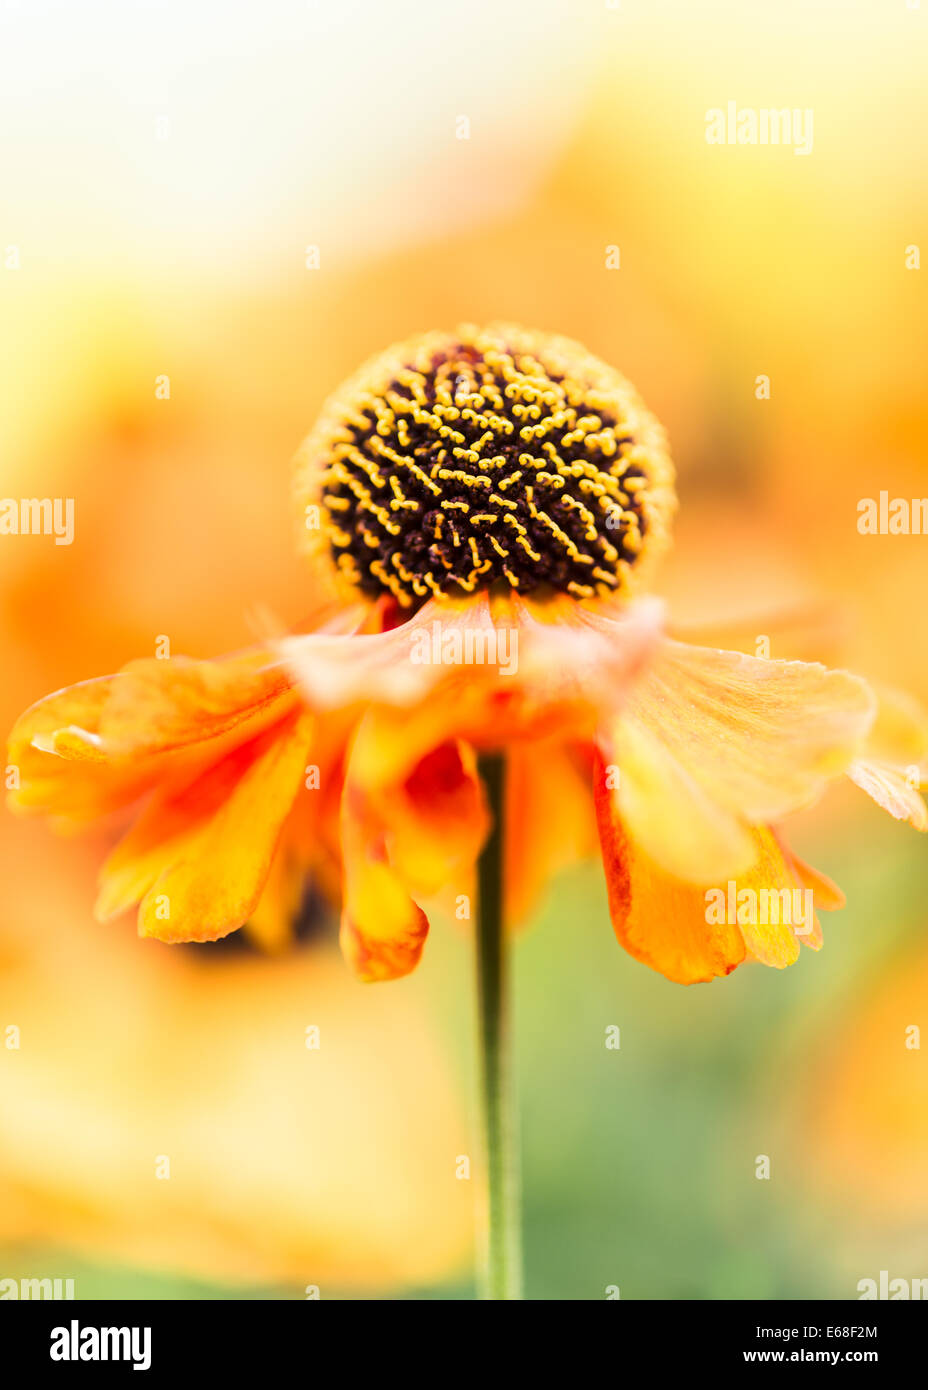 Helenium Waltraut sneezeweed Bronze orange daisy like flower with black center on soft green yellow background Stock Photo